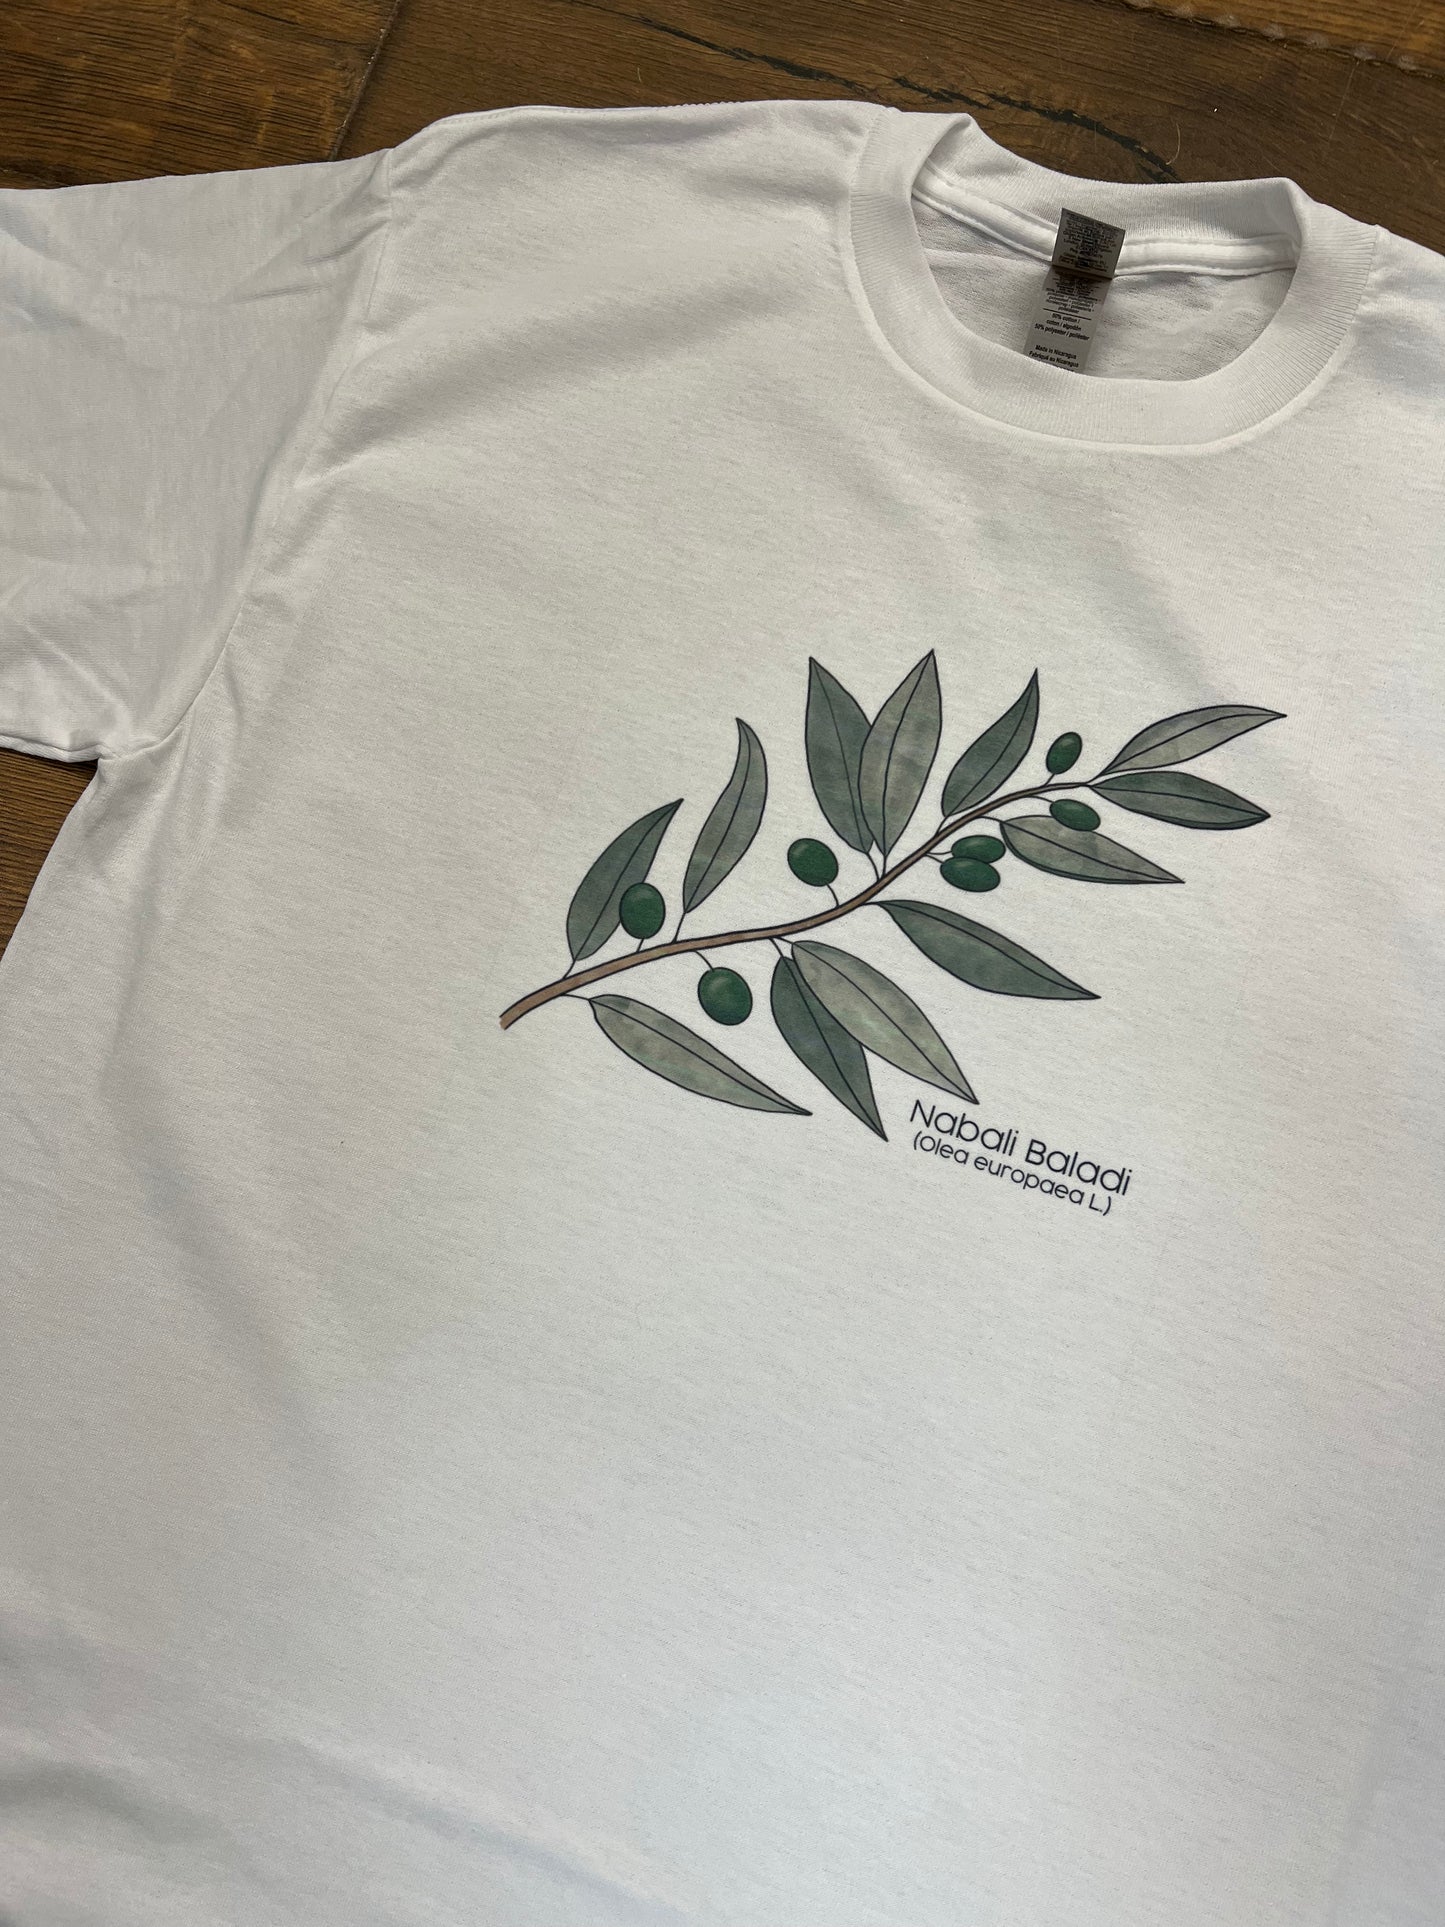 Palestine Olive Branch Shirt - Funding PCRF